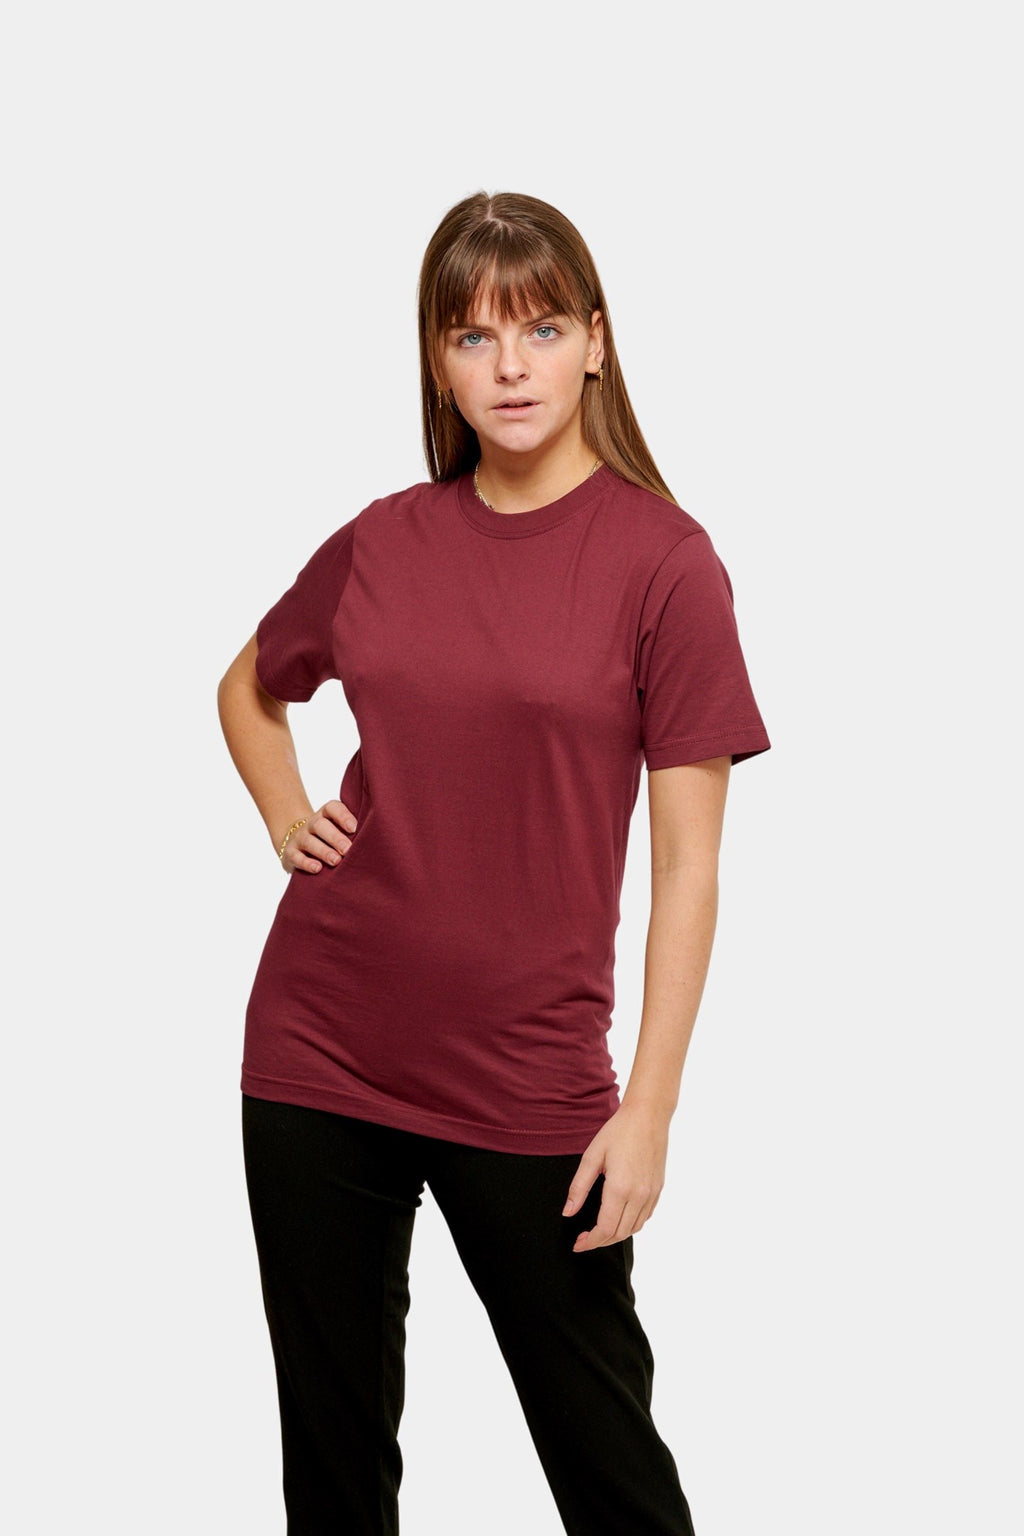 Oversized T-shirts - Women's Package Deal (9 pcs)